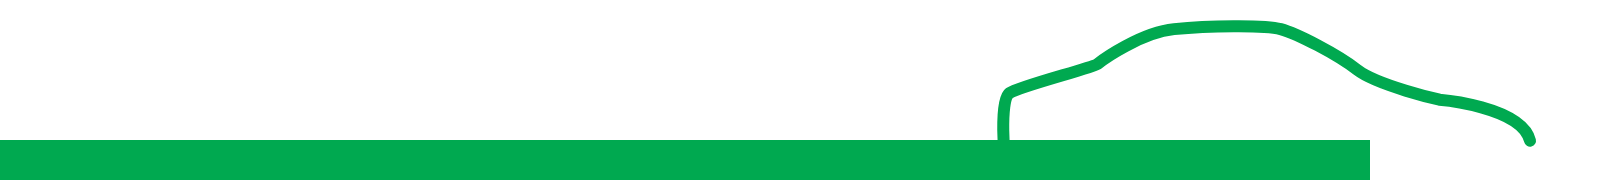 L'Expert Carrossier - Icône auto du logo avec ligne verte